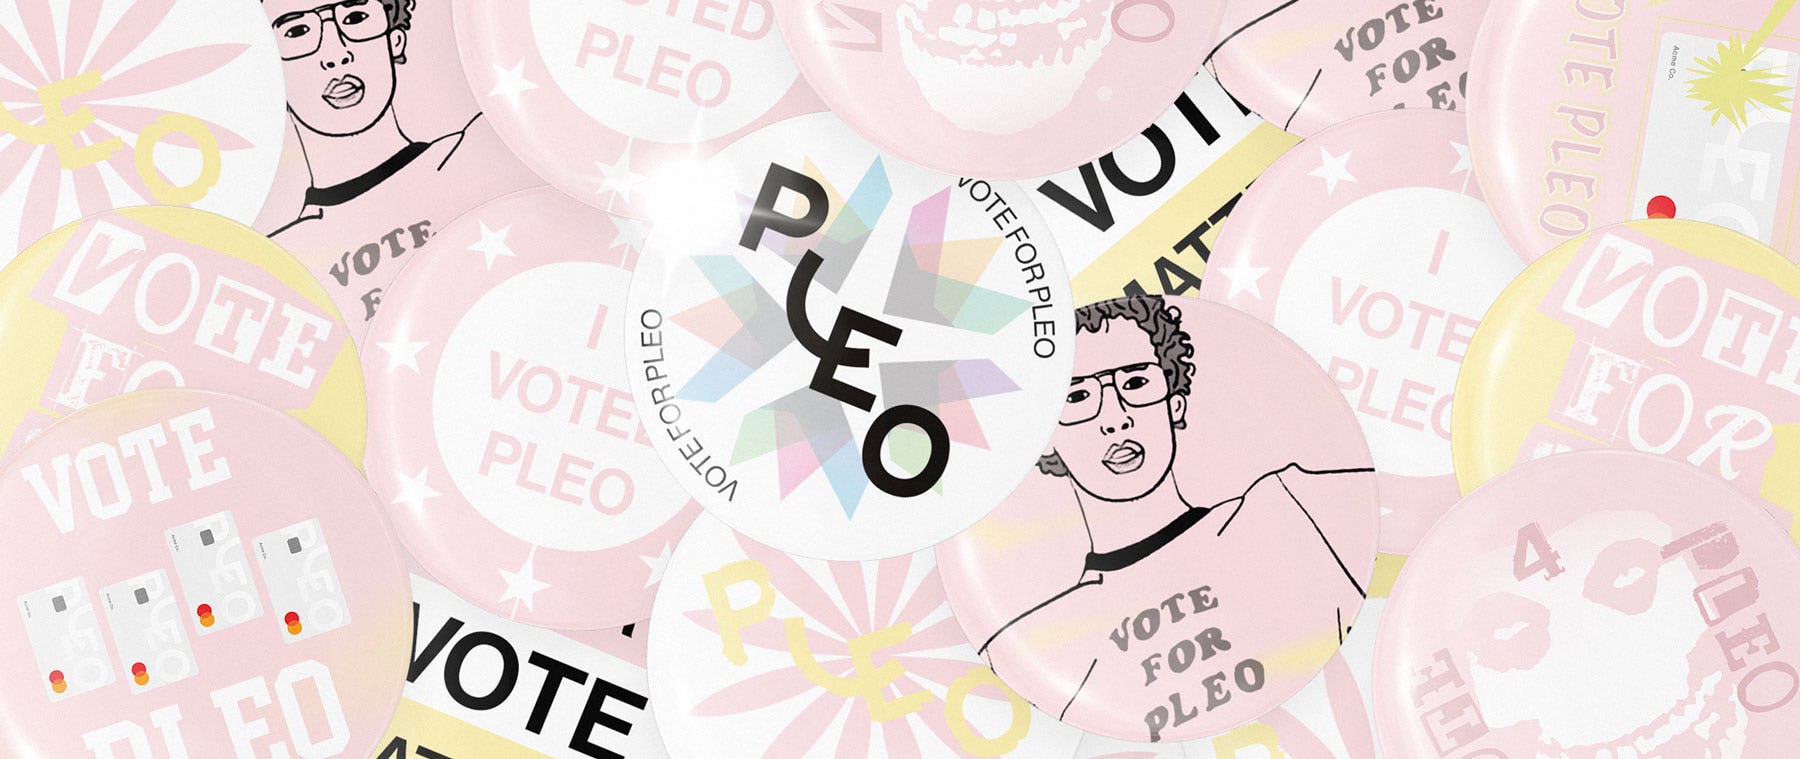 Vote for Pleo 2020